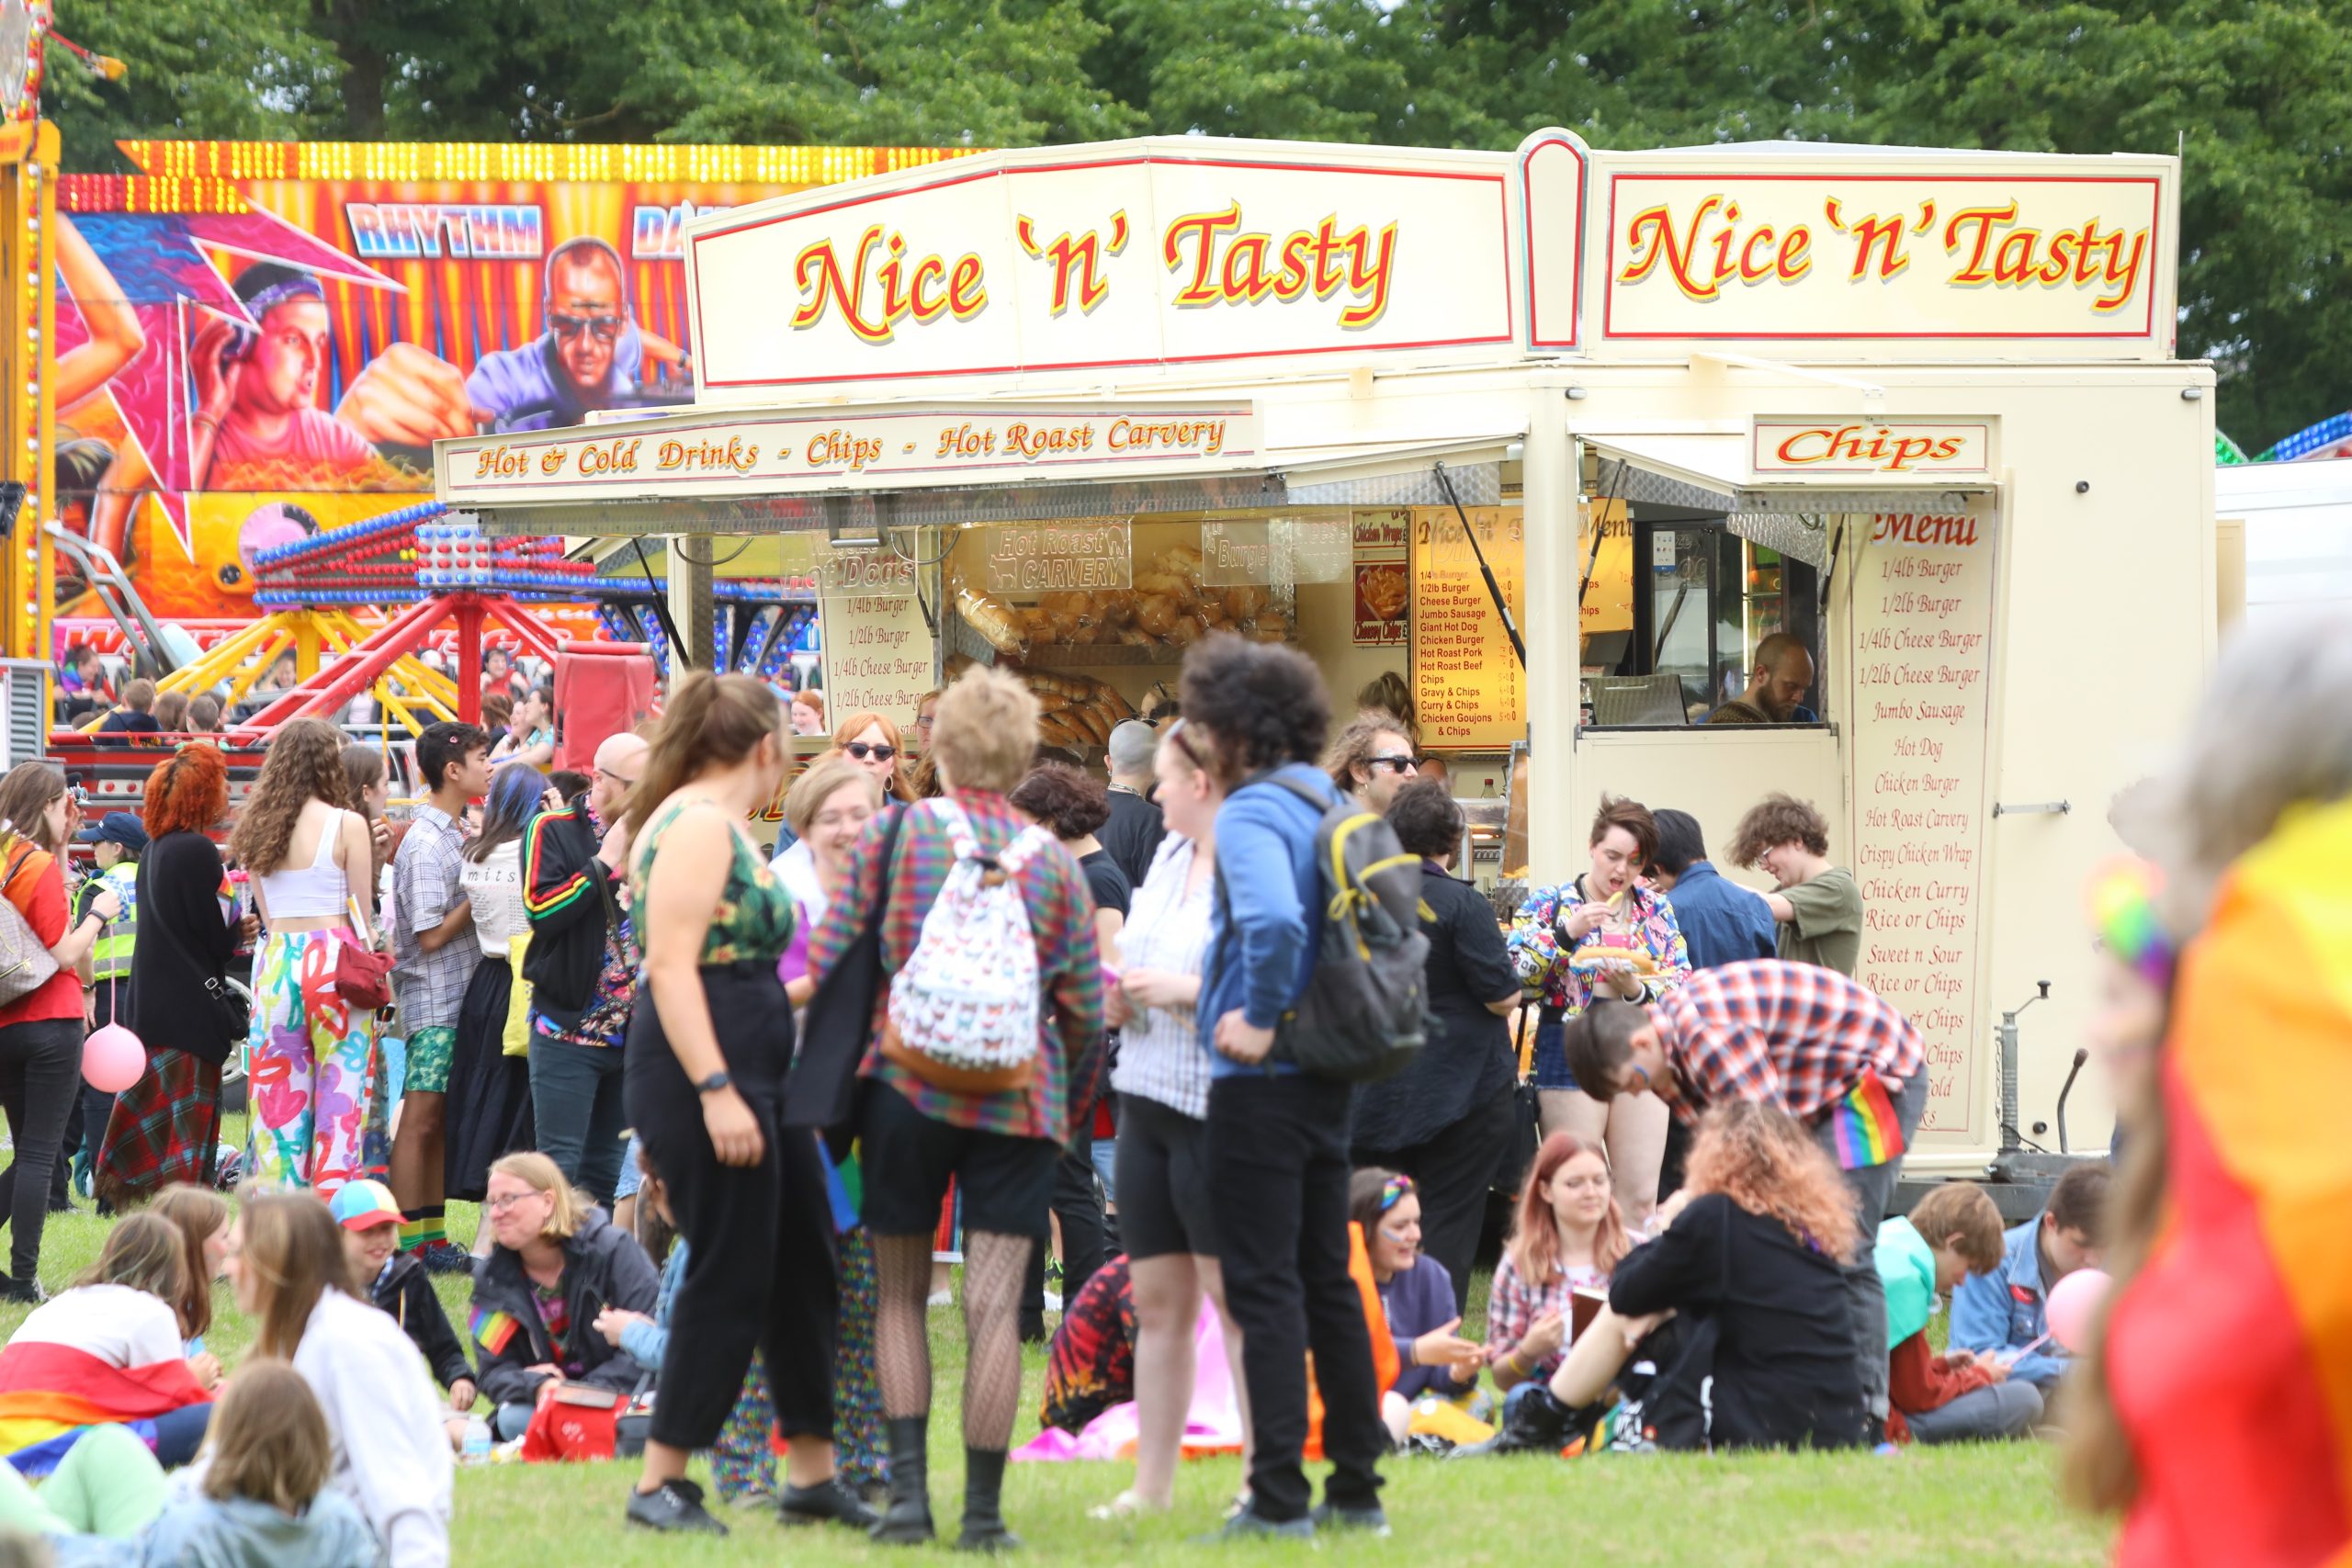 Food and fairground stalls